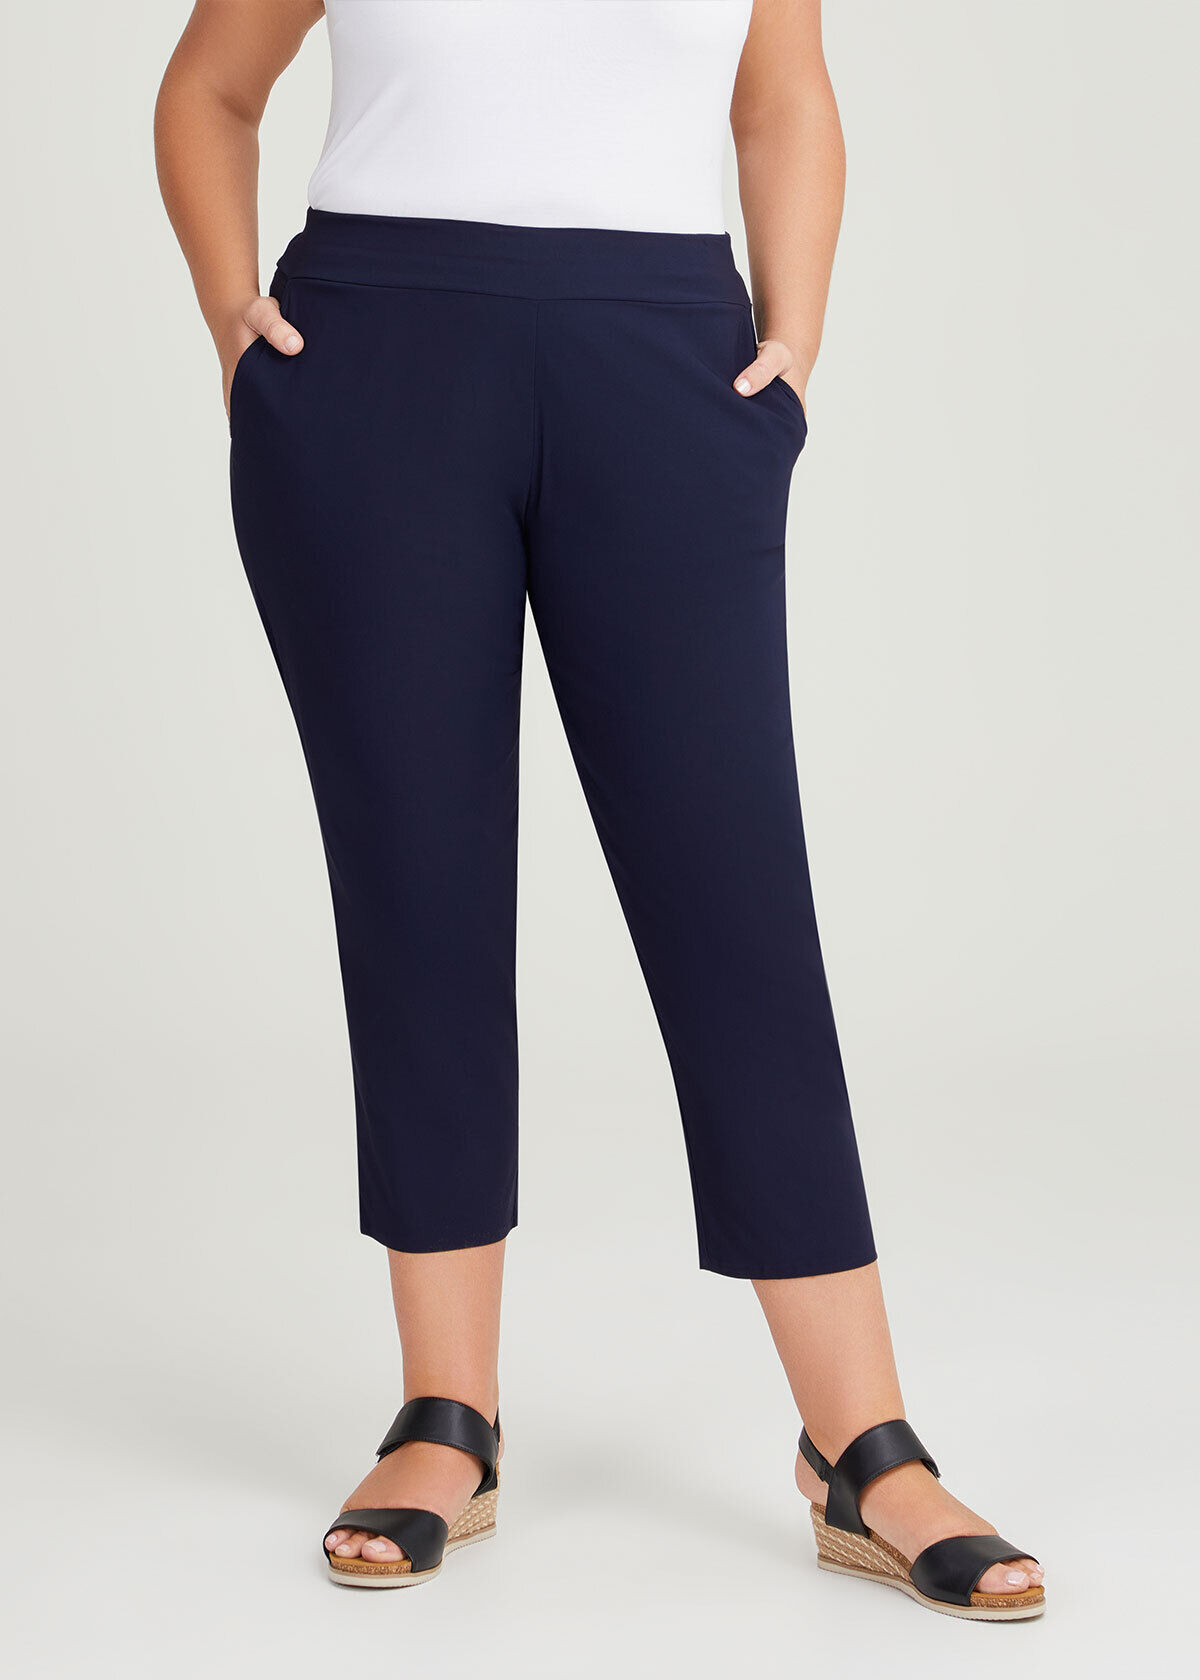 Alivia Ford Women's Plus Size Roll Cuff Denim Capri Jeans with Printed Belt  - Walmart.com